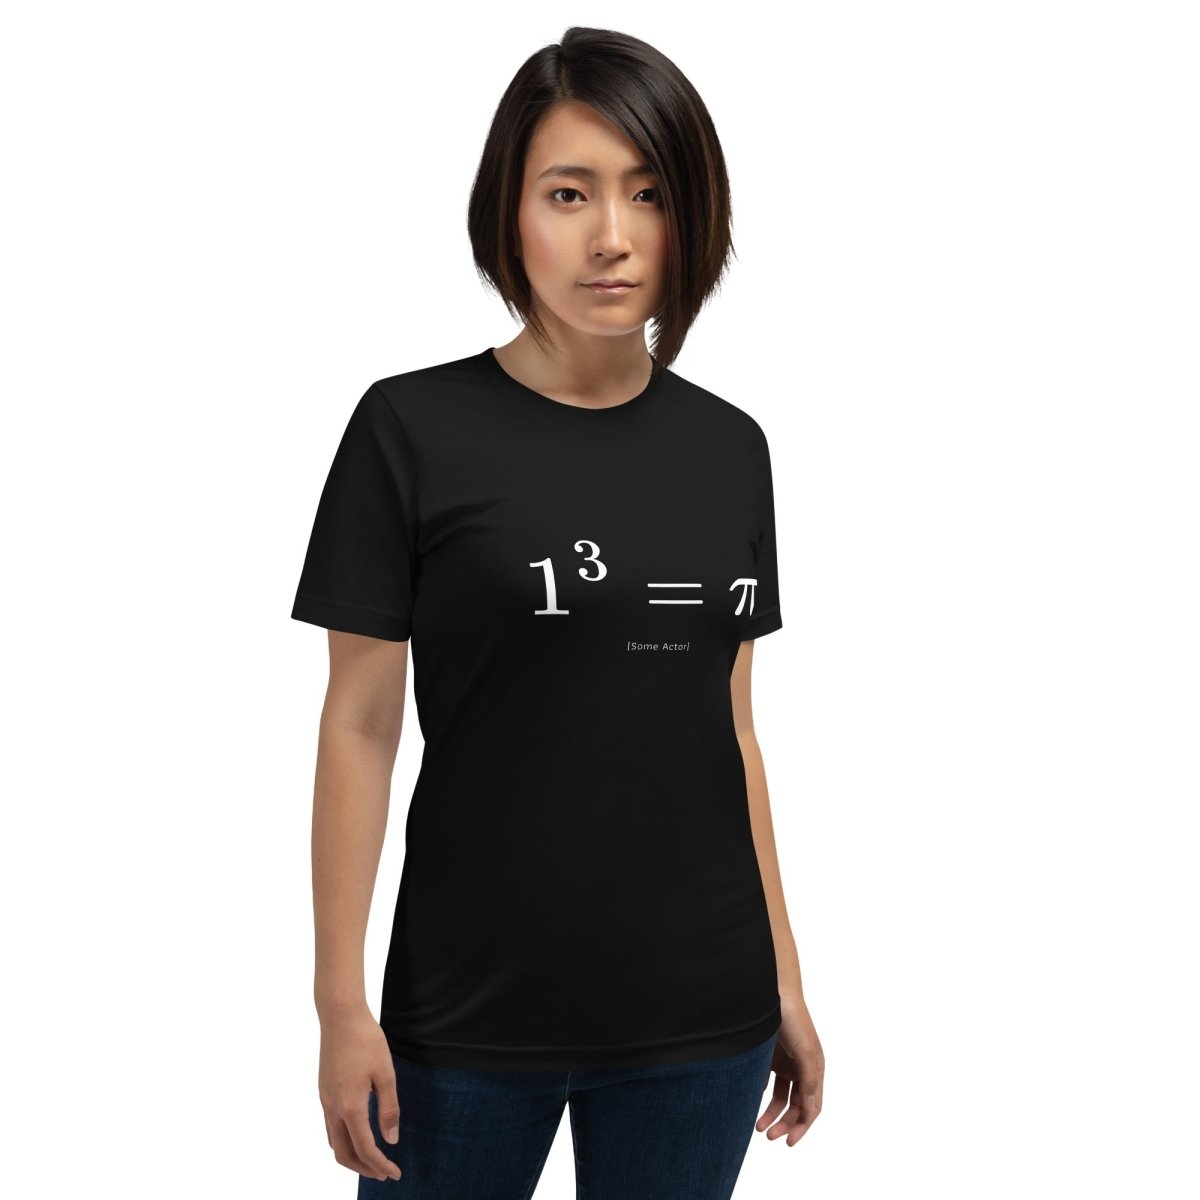 1 Cubed Equals Pi T - Shirt (unisex) - AI Store